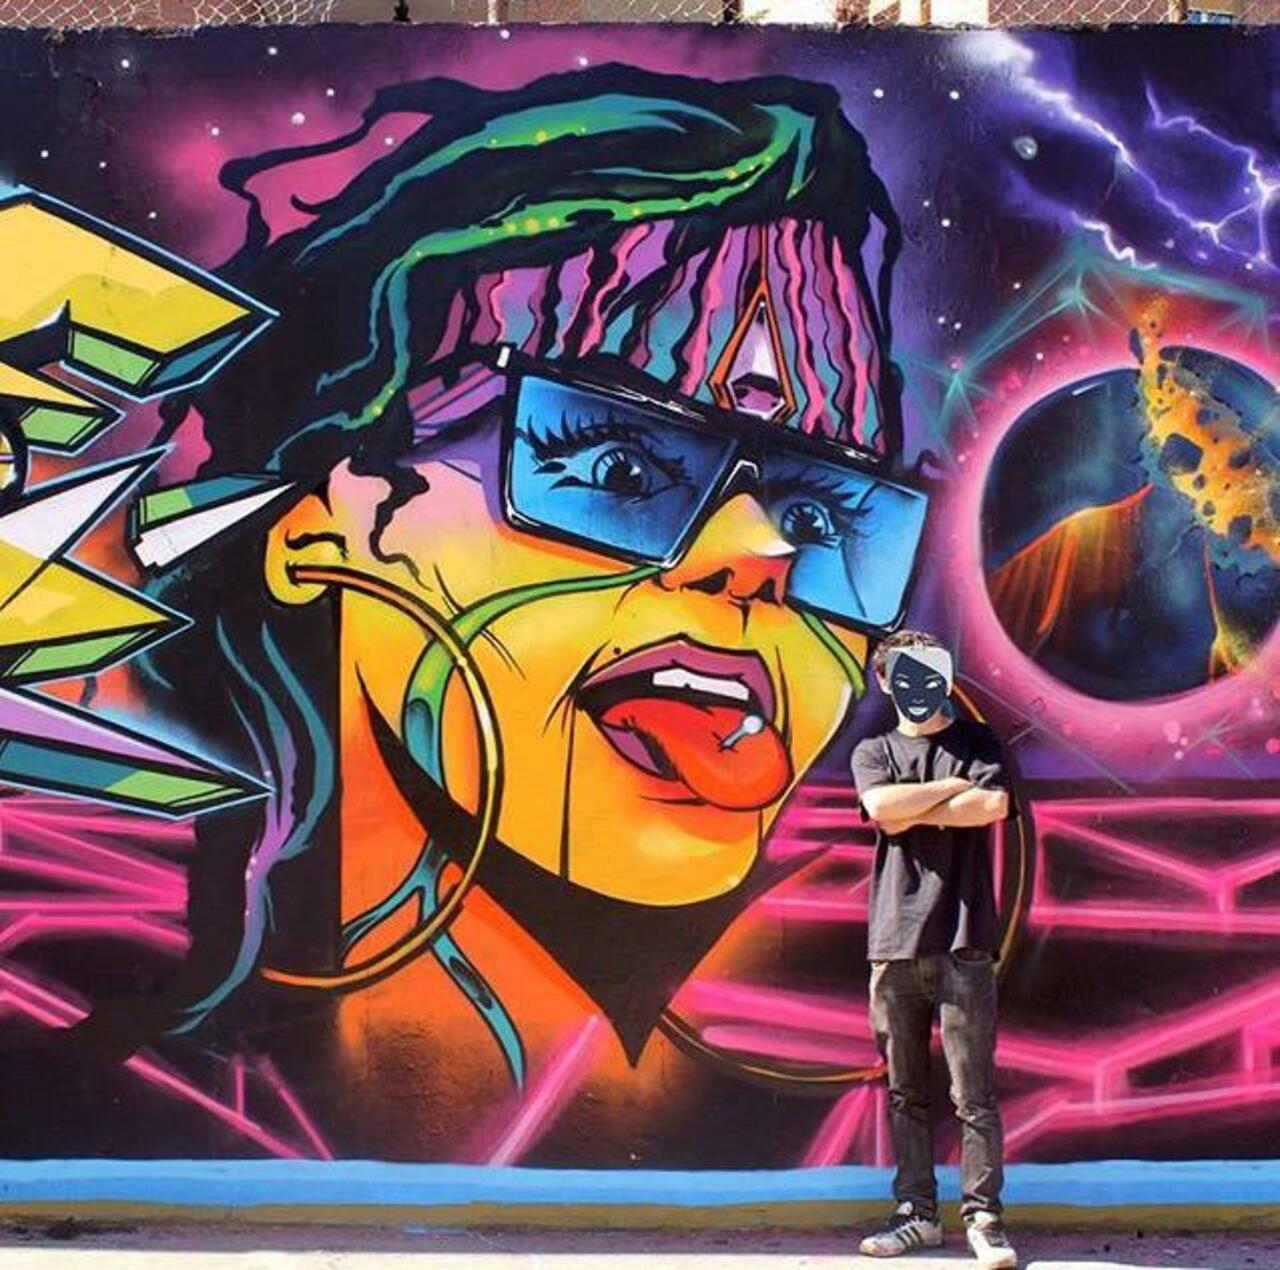 Brilliant new Street Art by the artist Jaycaes #art #graffiti #mural #streetart http://t.co/TiNYDNPlxf … http://twitter.com/charlesjackso14/status/649564712313724928